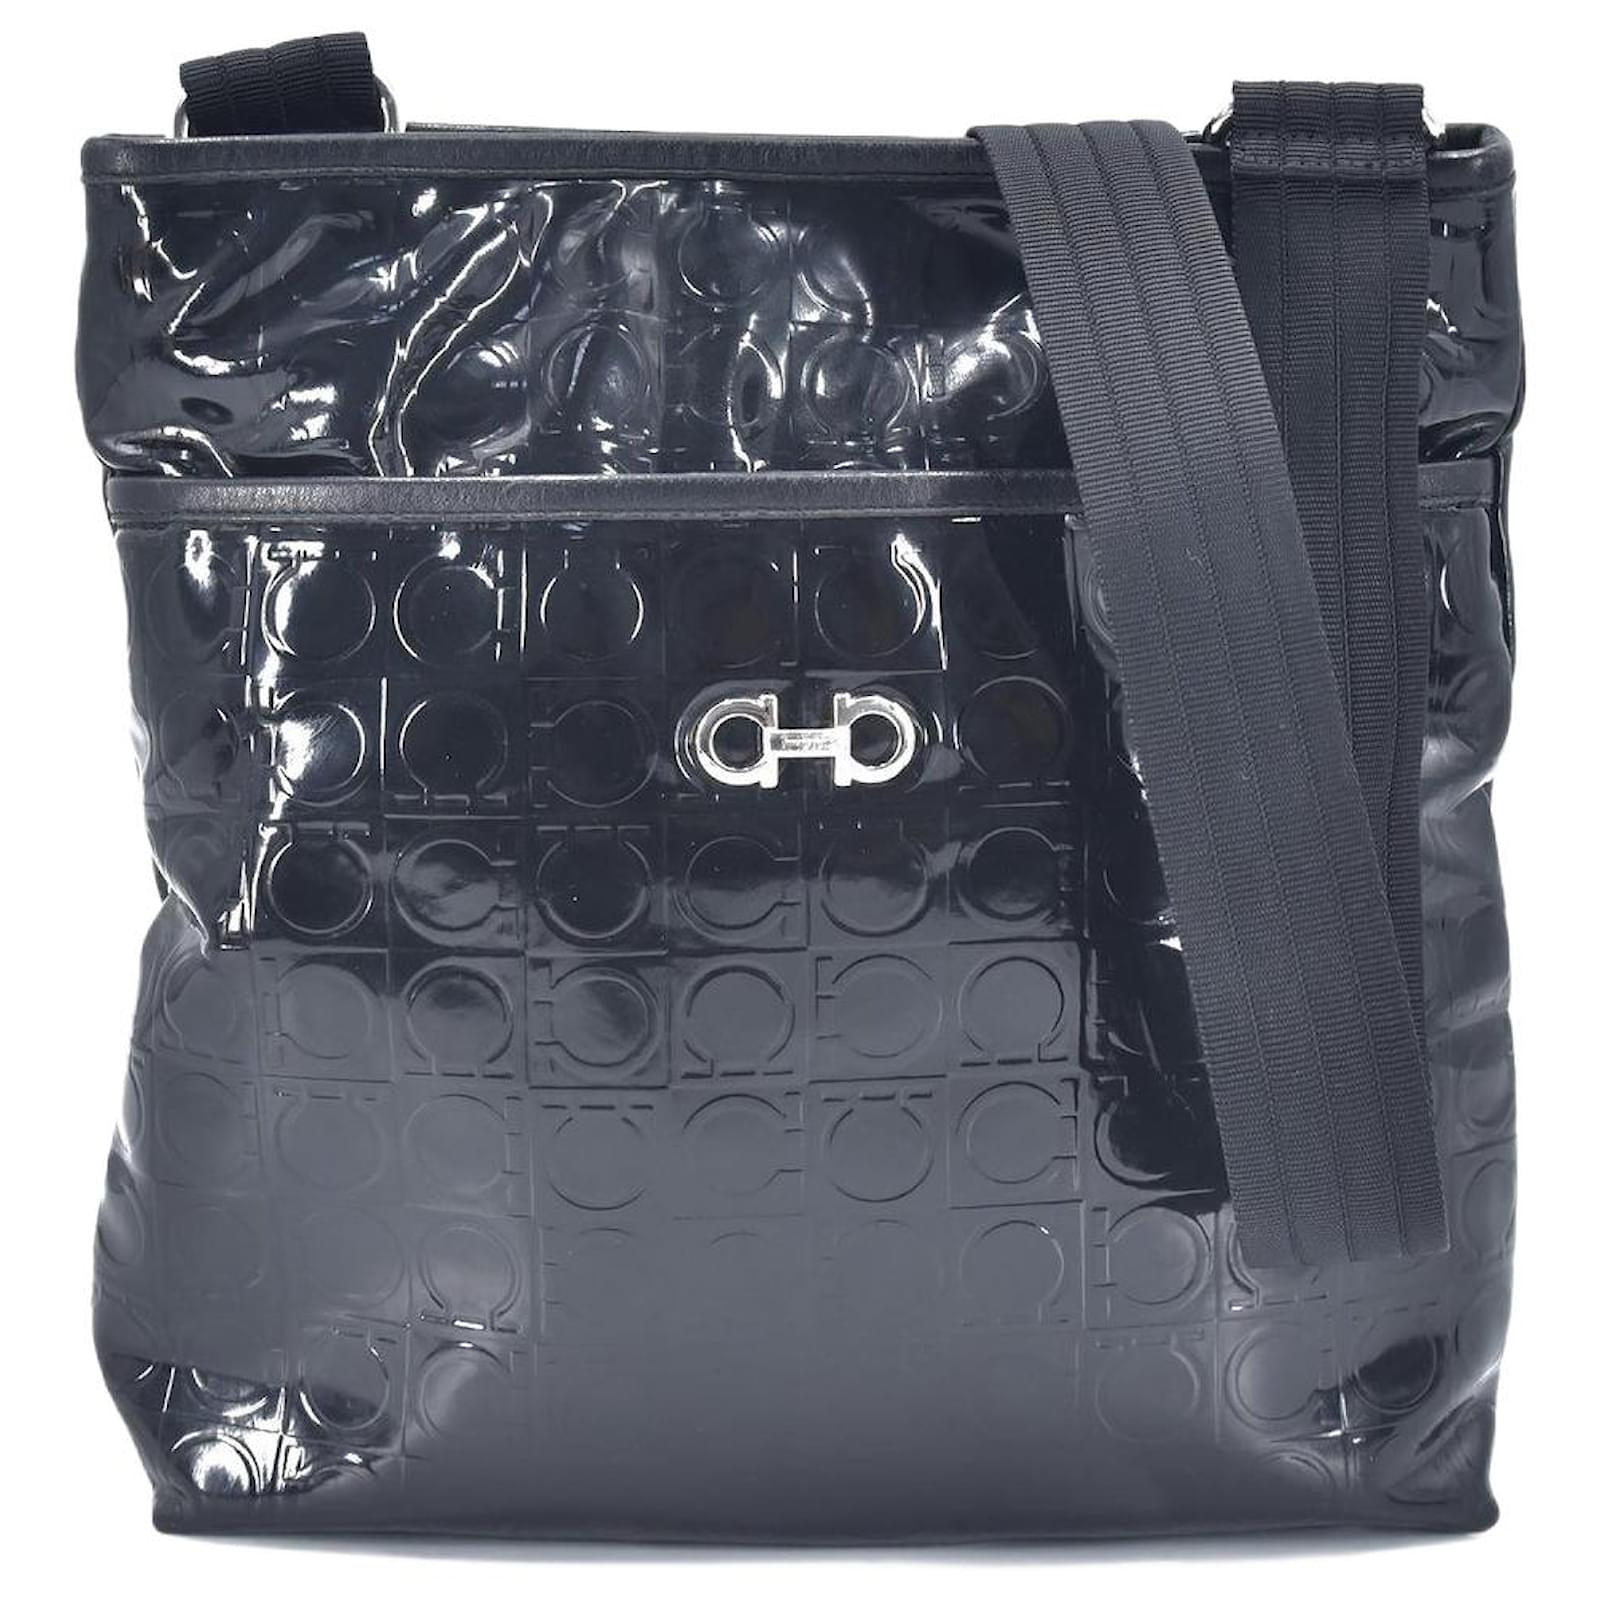 Calvin Klein Crossbody Bag - One Size - Black - Women